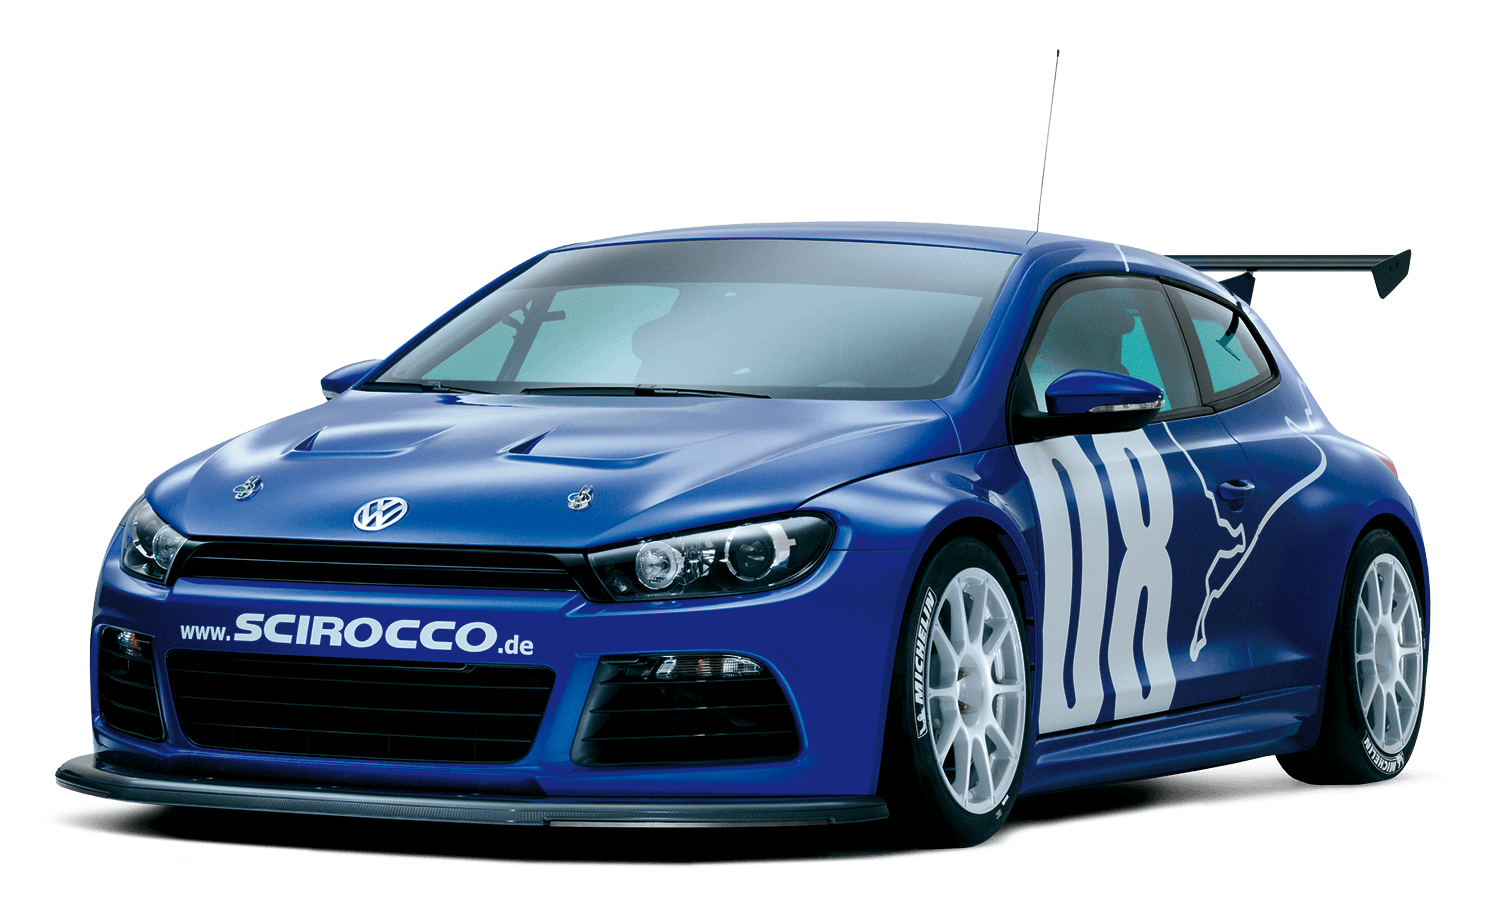 Racing Volkswagen Scirocco Png Car Image PNG Image